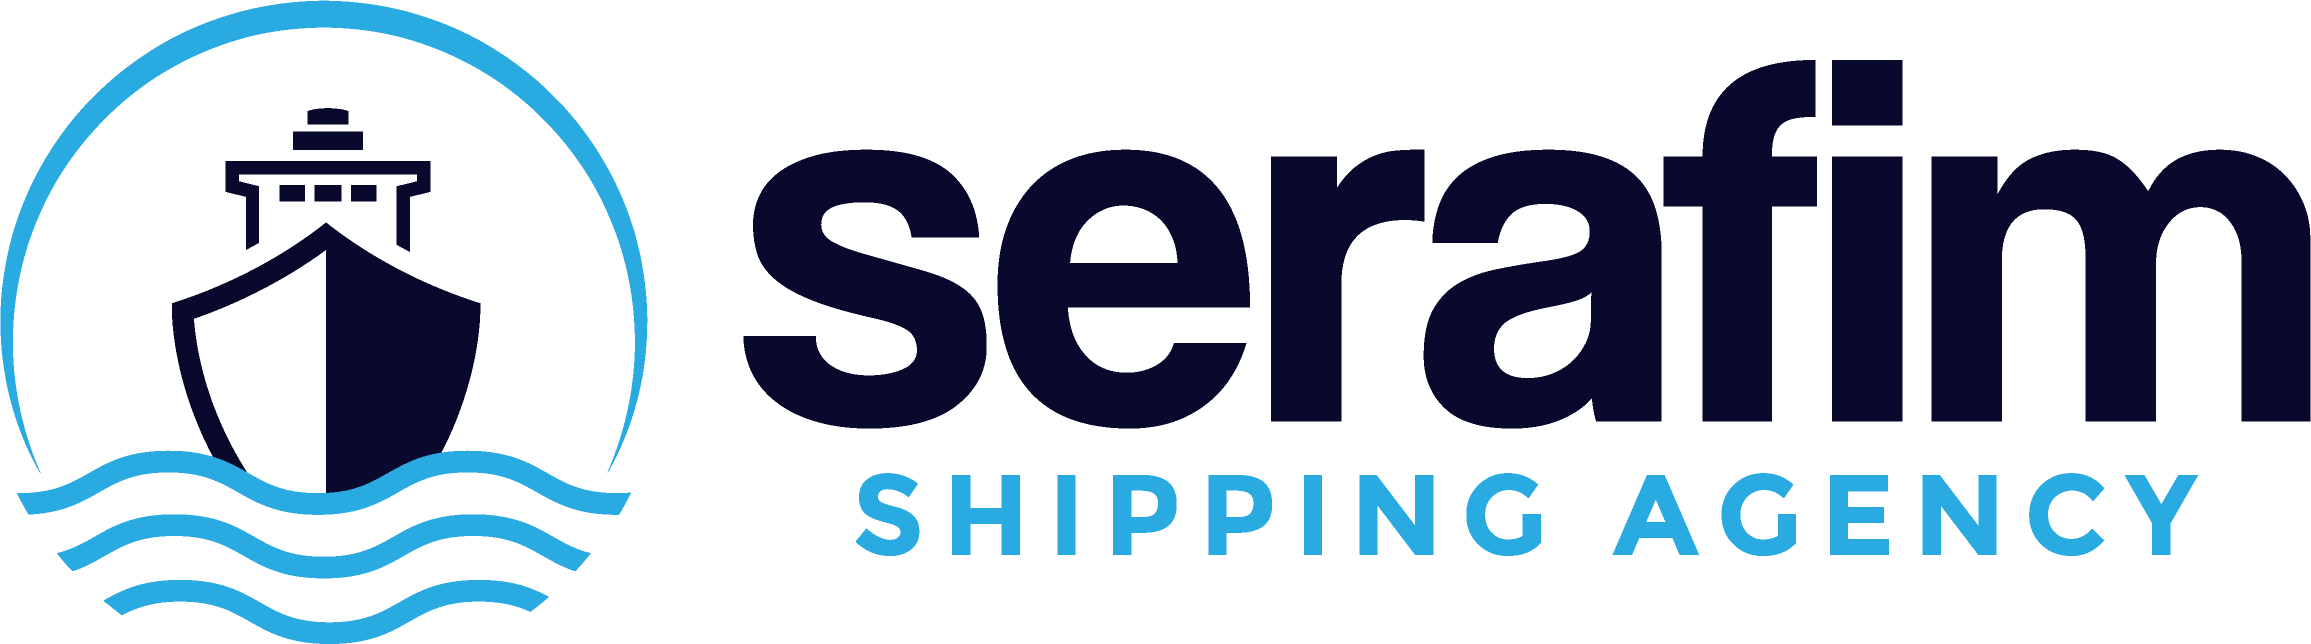 serafim-shipping-agency